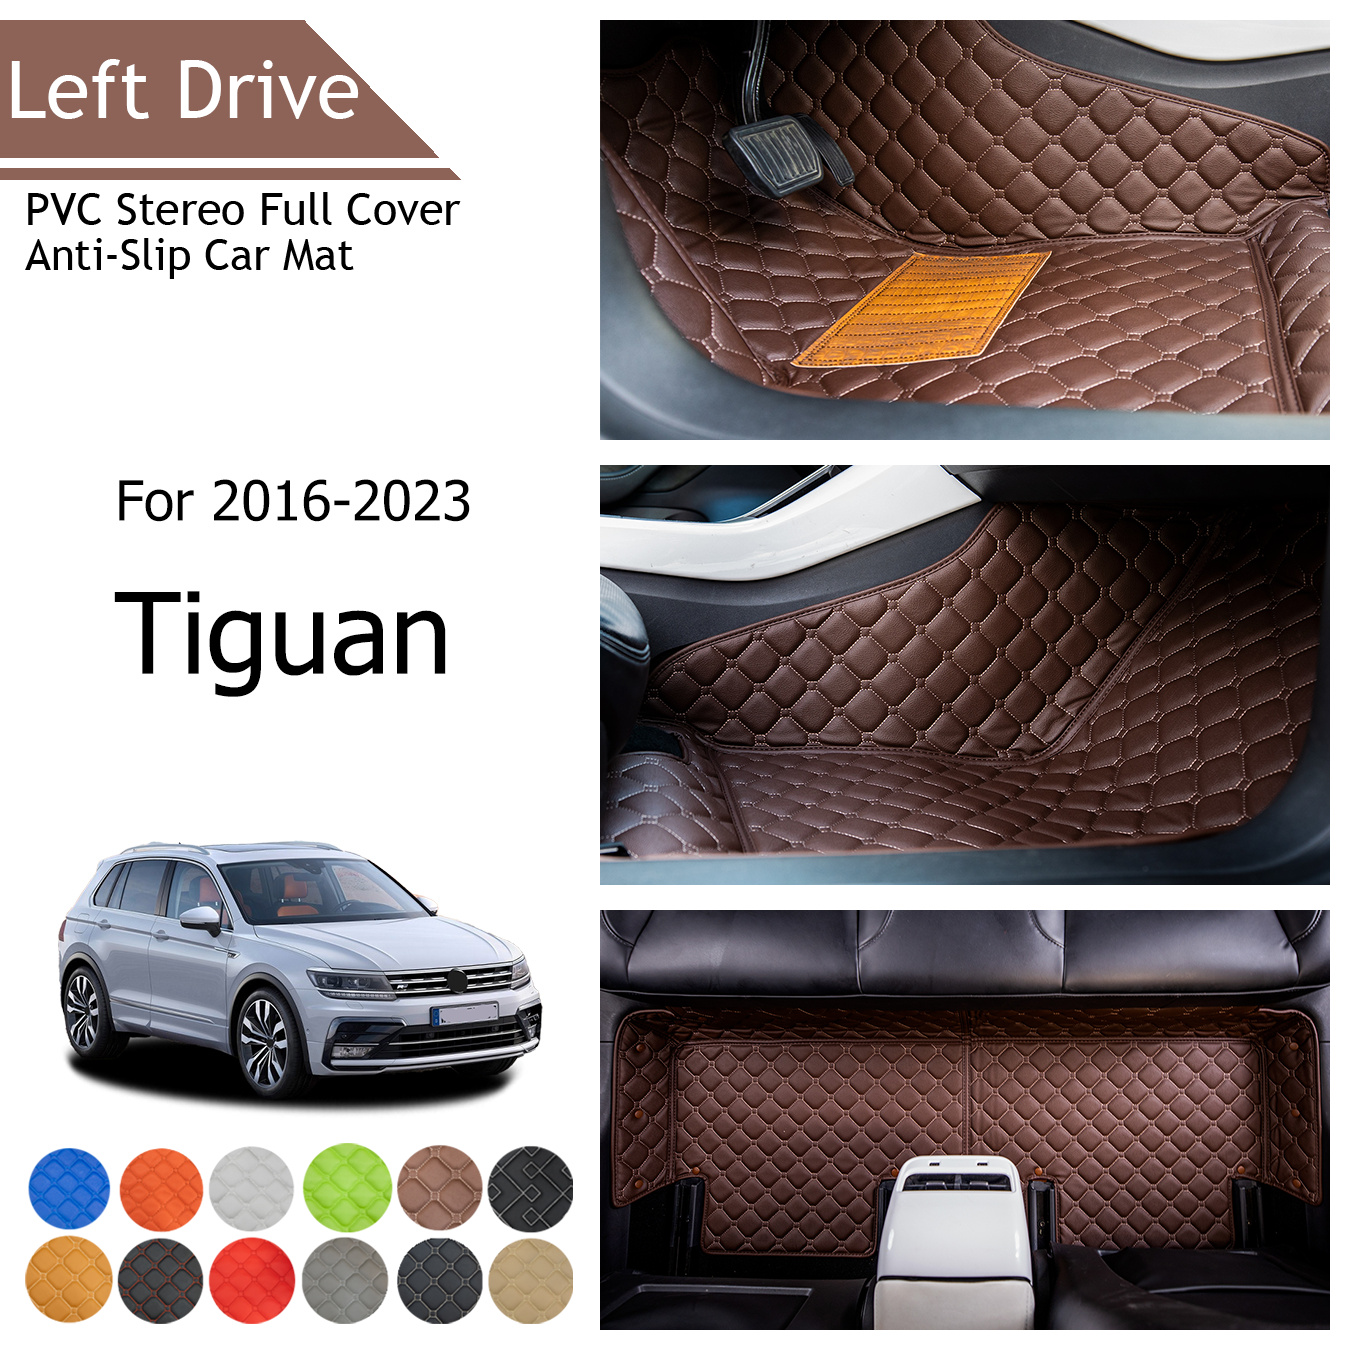 Half Size Car Covers car makes - tiguan